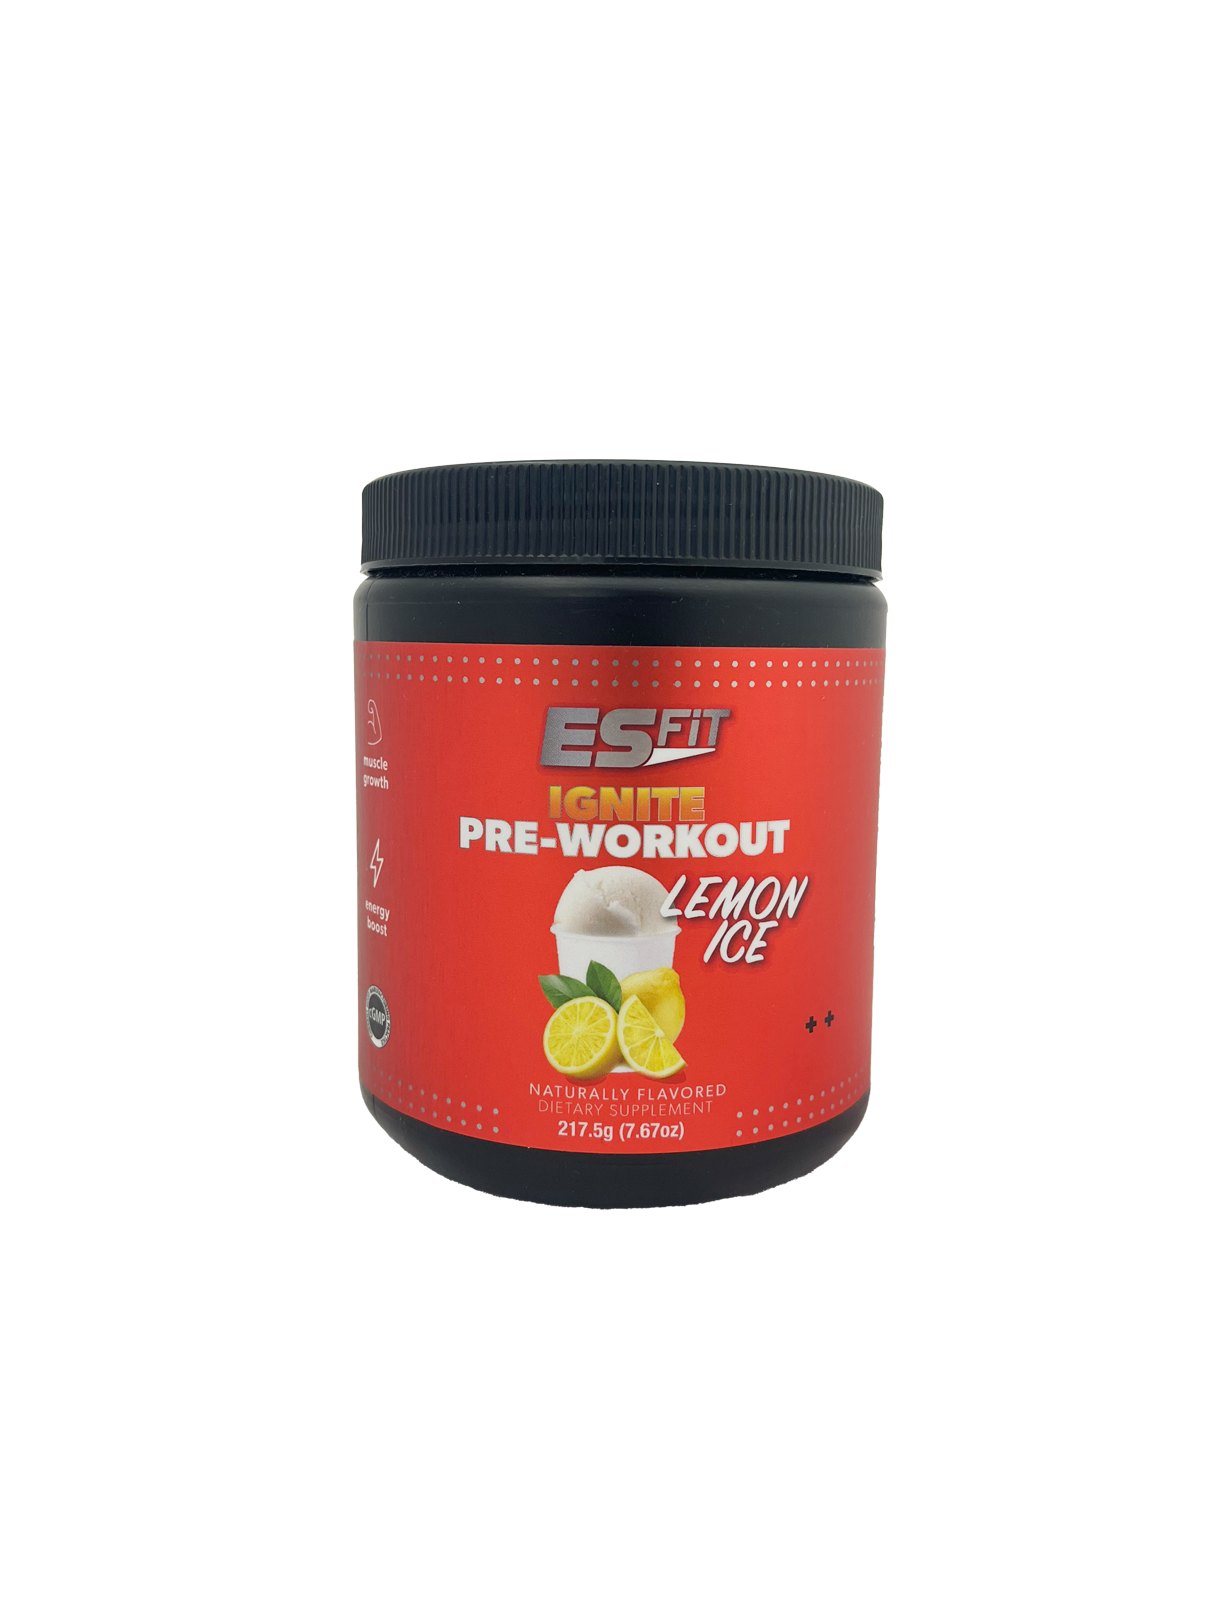 Ignite Pre-workout- Lemon Ice